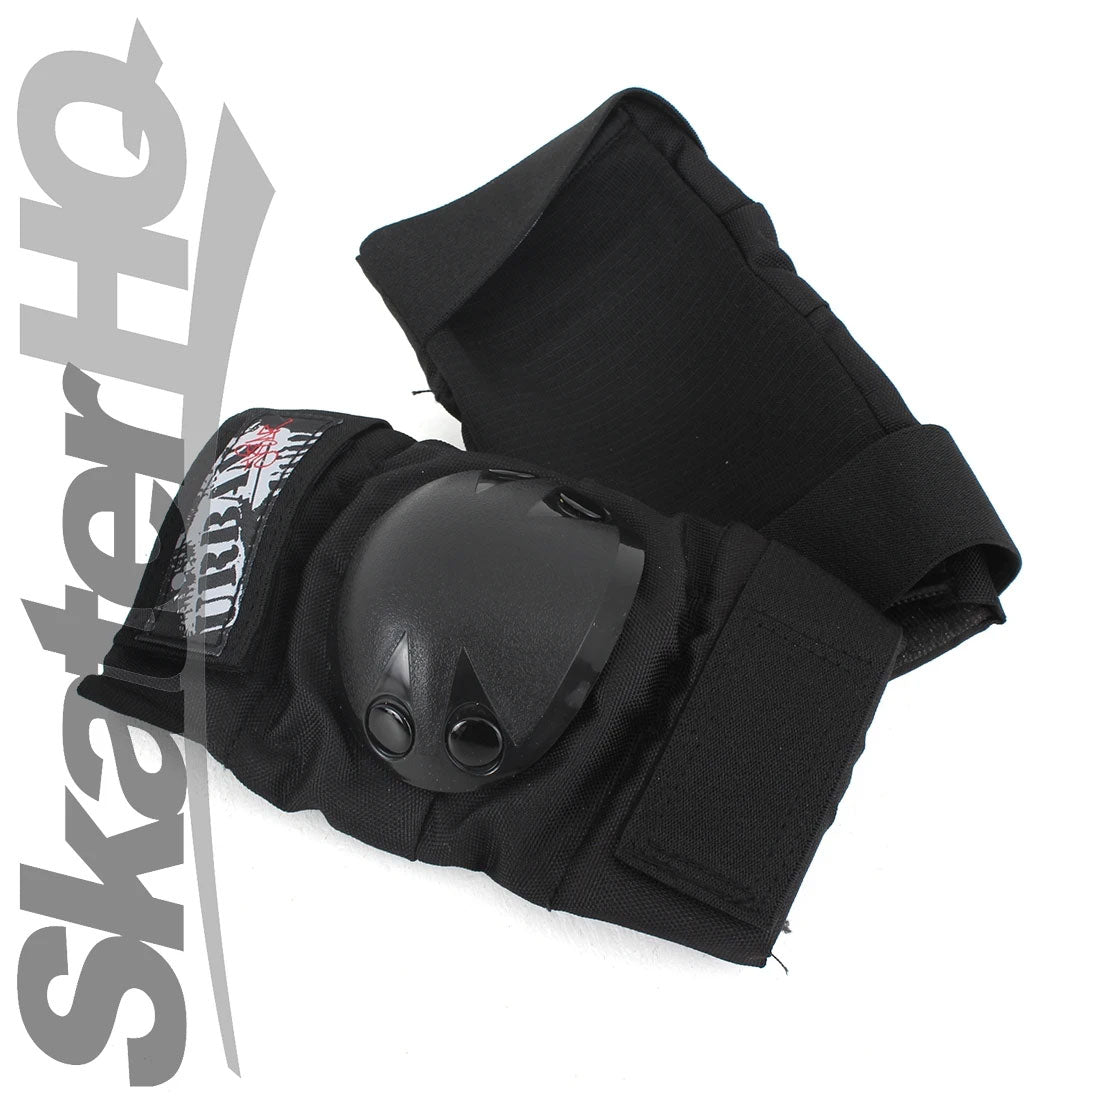 Urban Skater Knee/Elbow Black - Junior Protective Gear